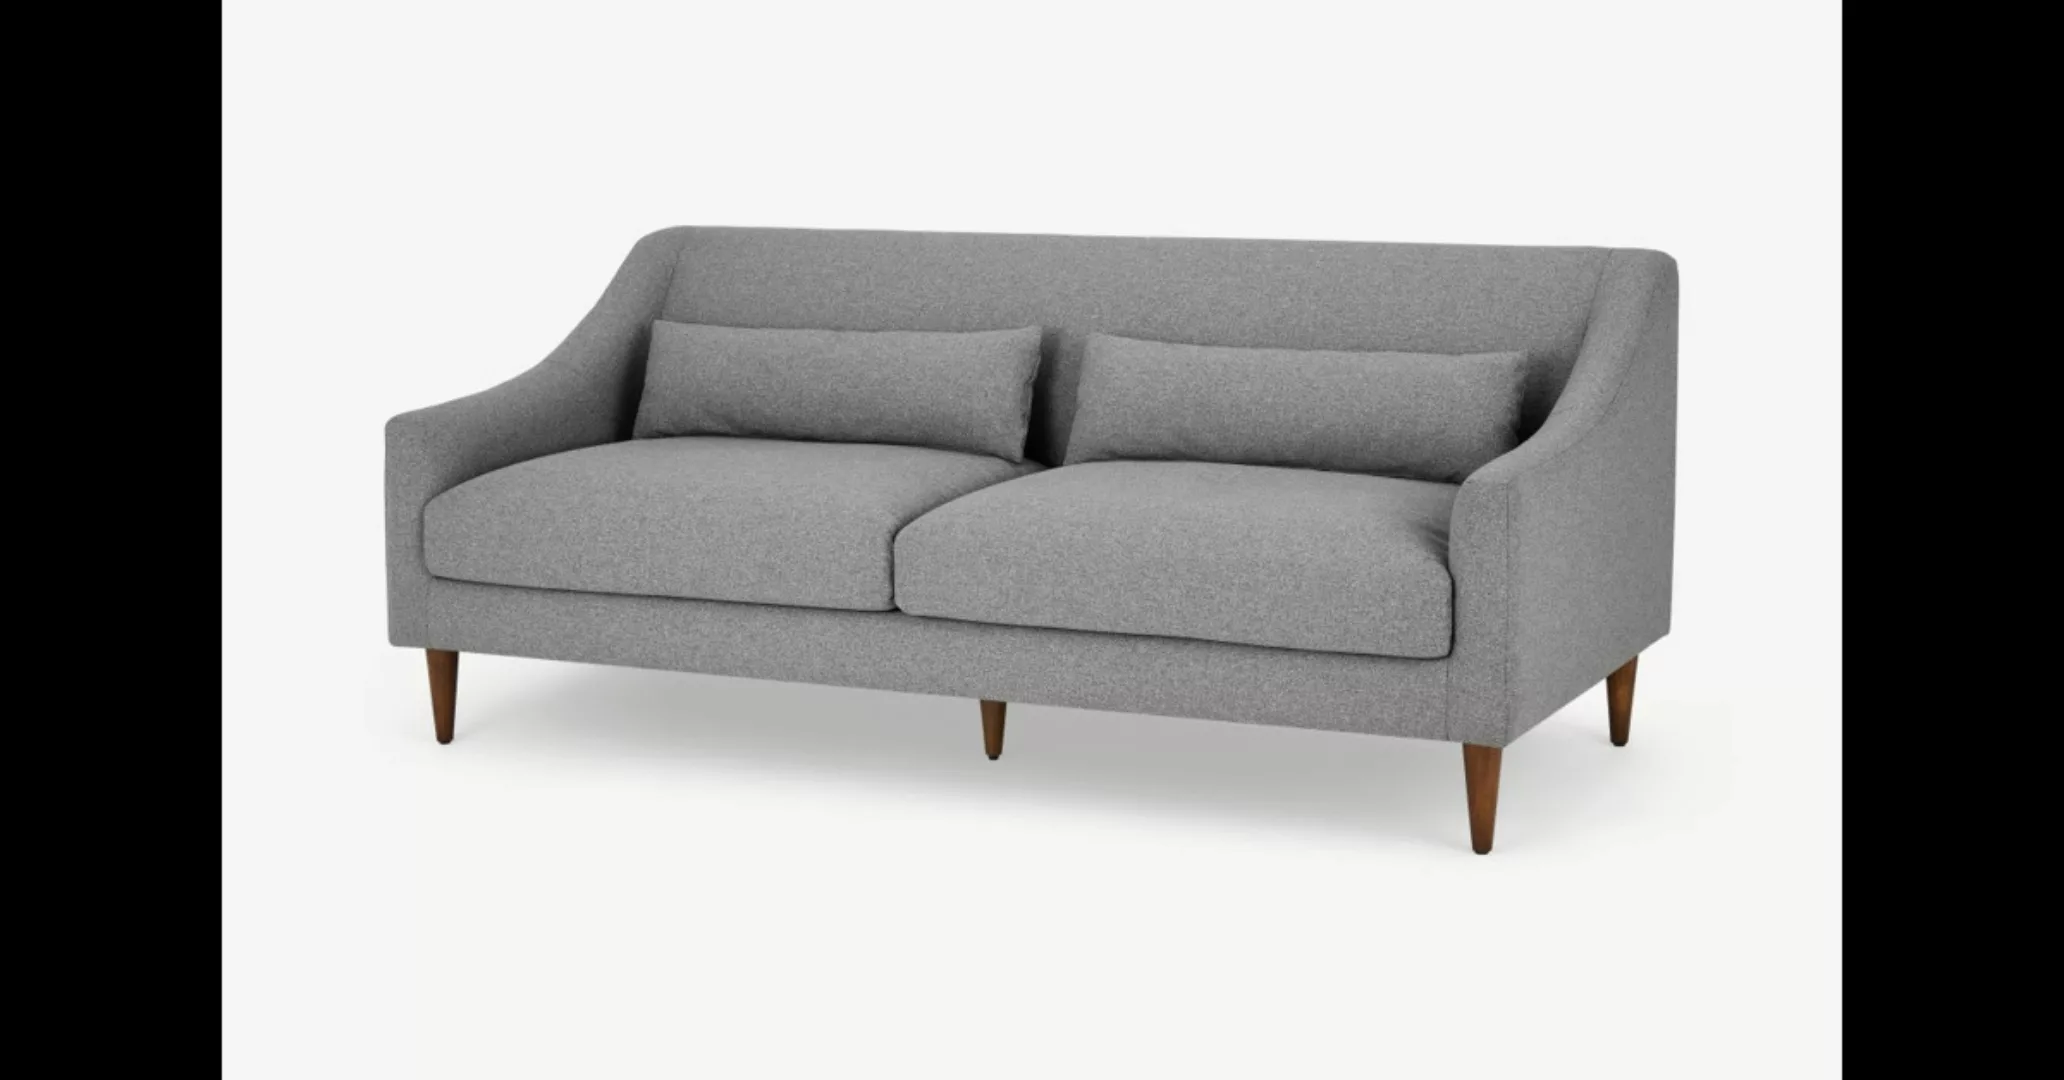 Herton 3-Sitzer Sofa, Felsengrau - MADE.com günstig online kaufen